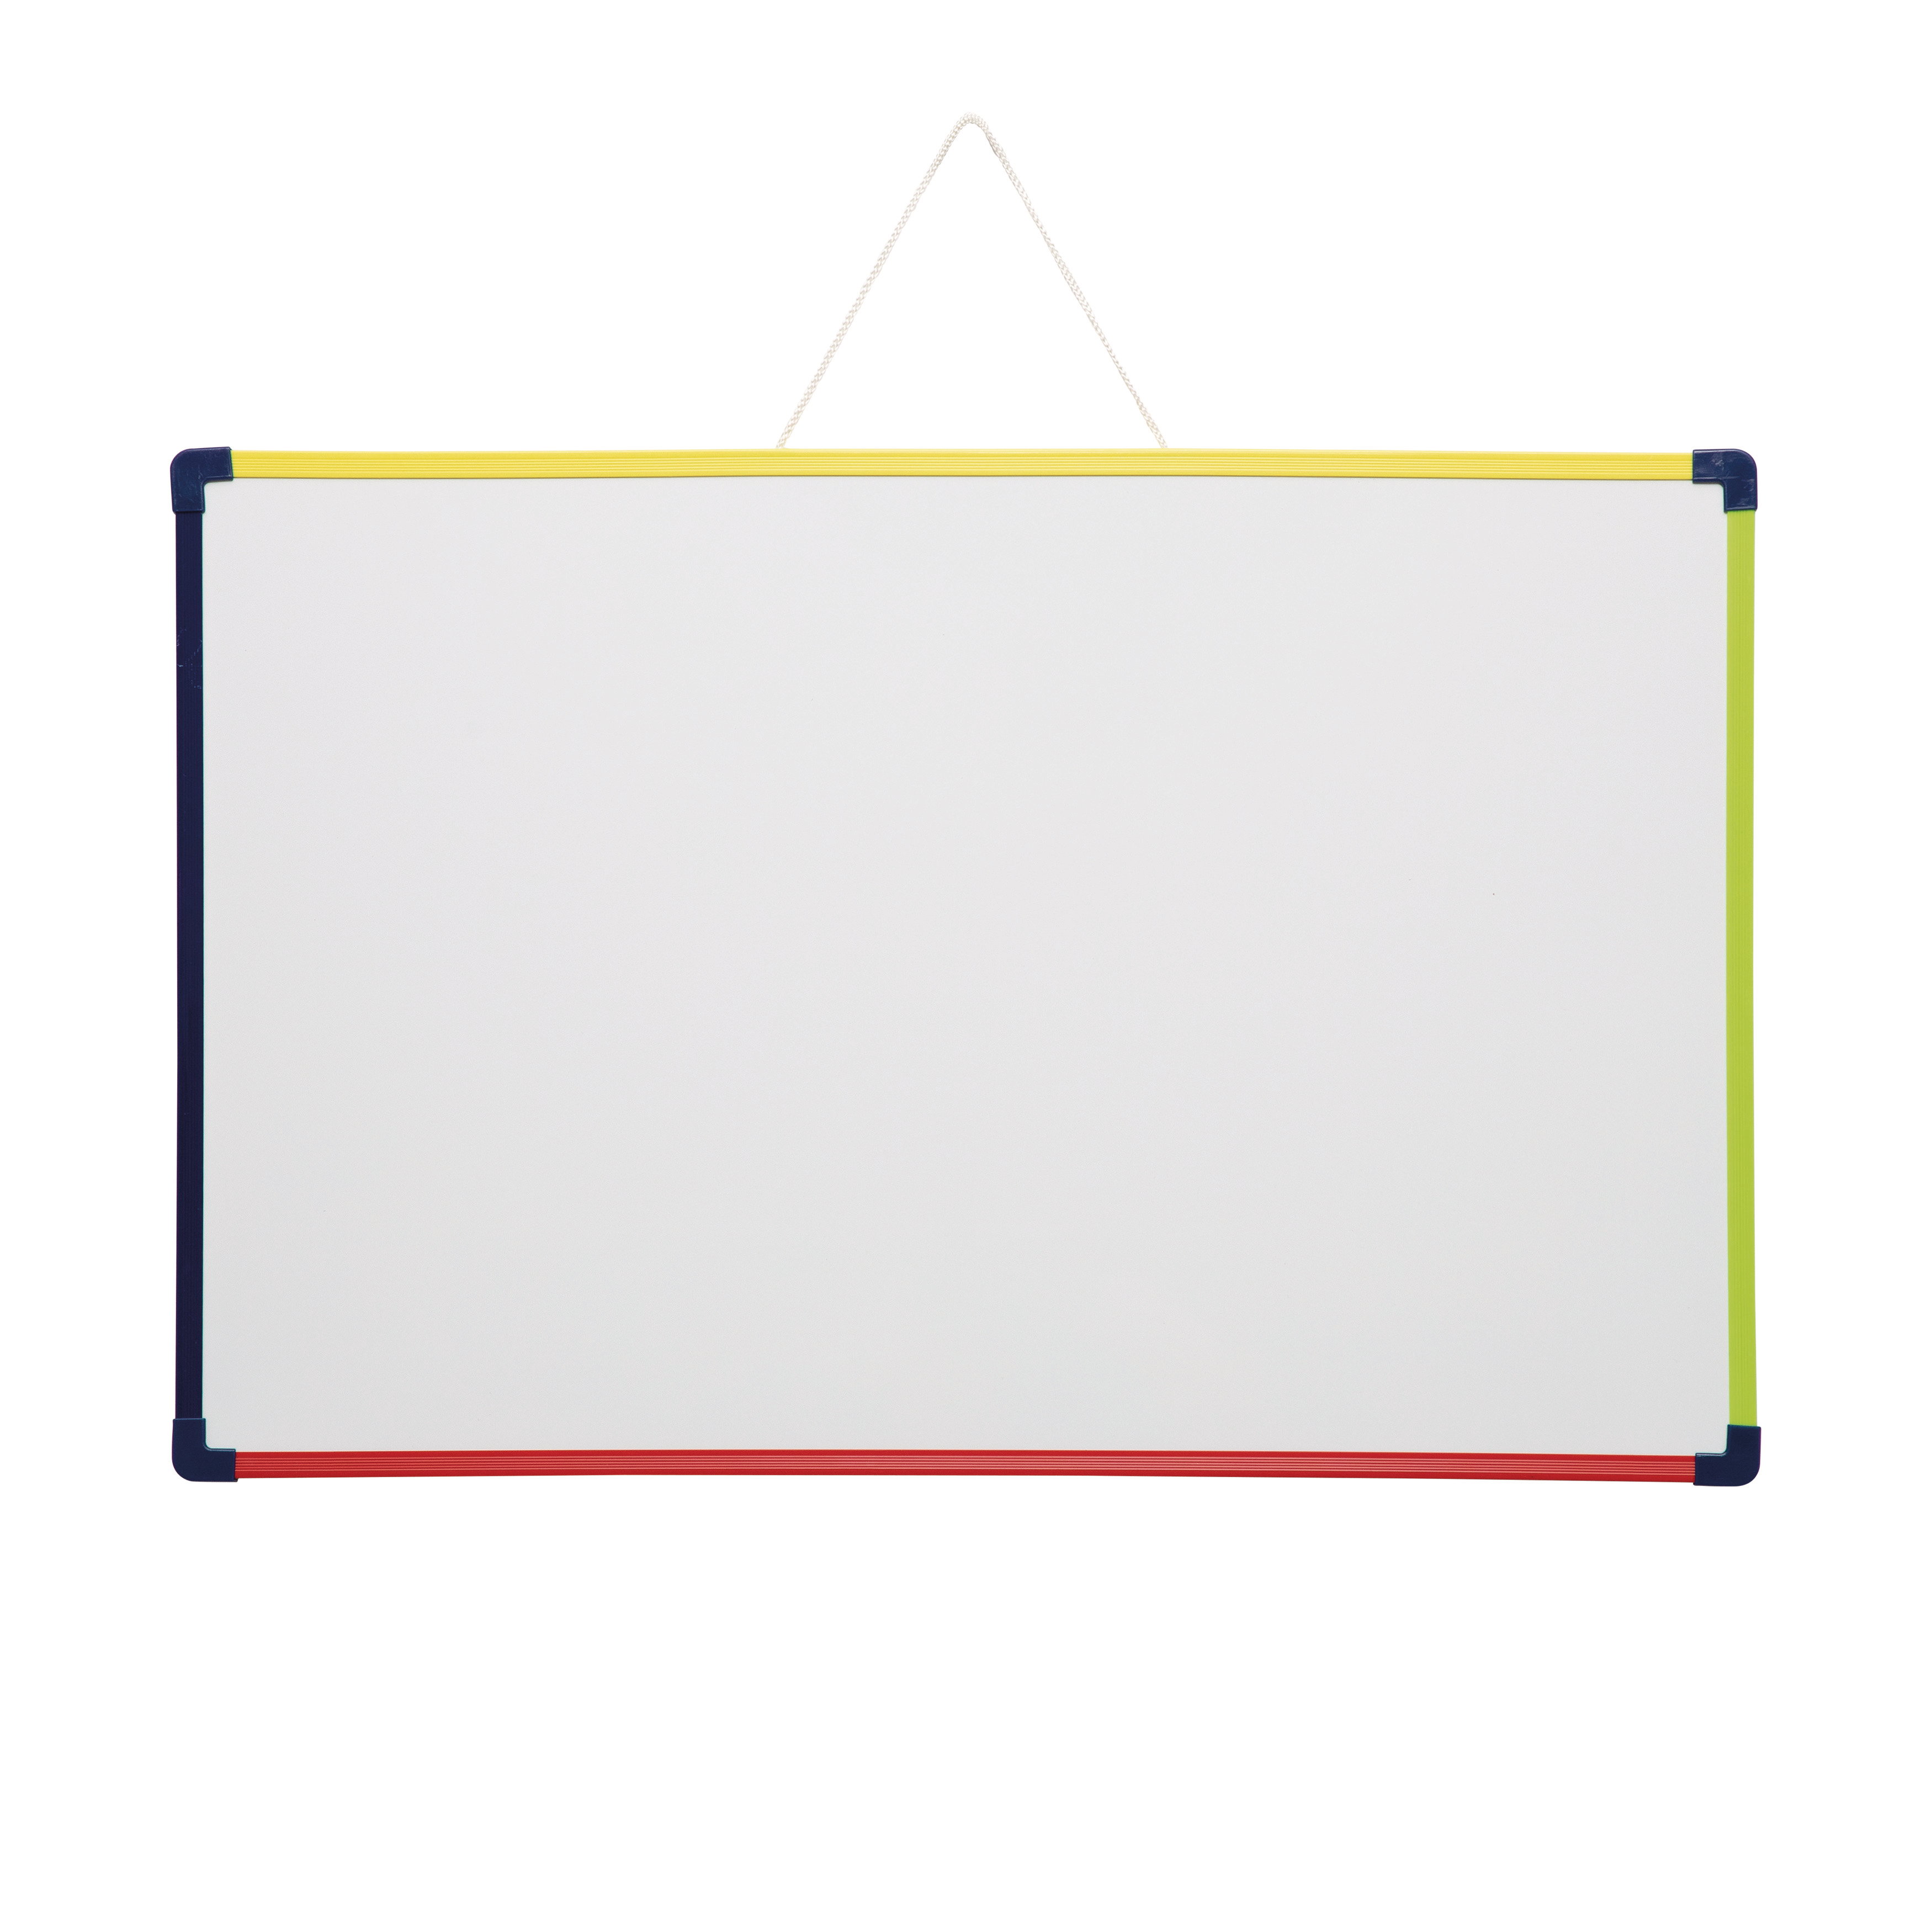 MAUL Whiteboard MAULfun 6281699 38.5 x 58.5 cm plastique